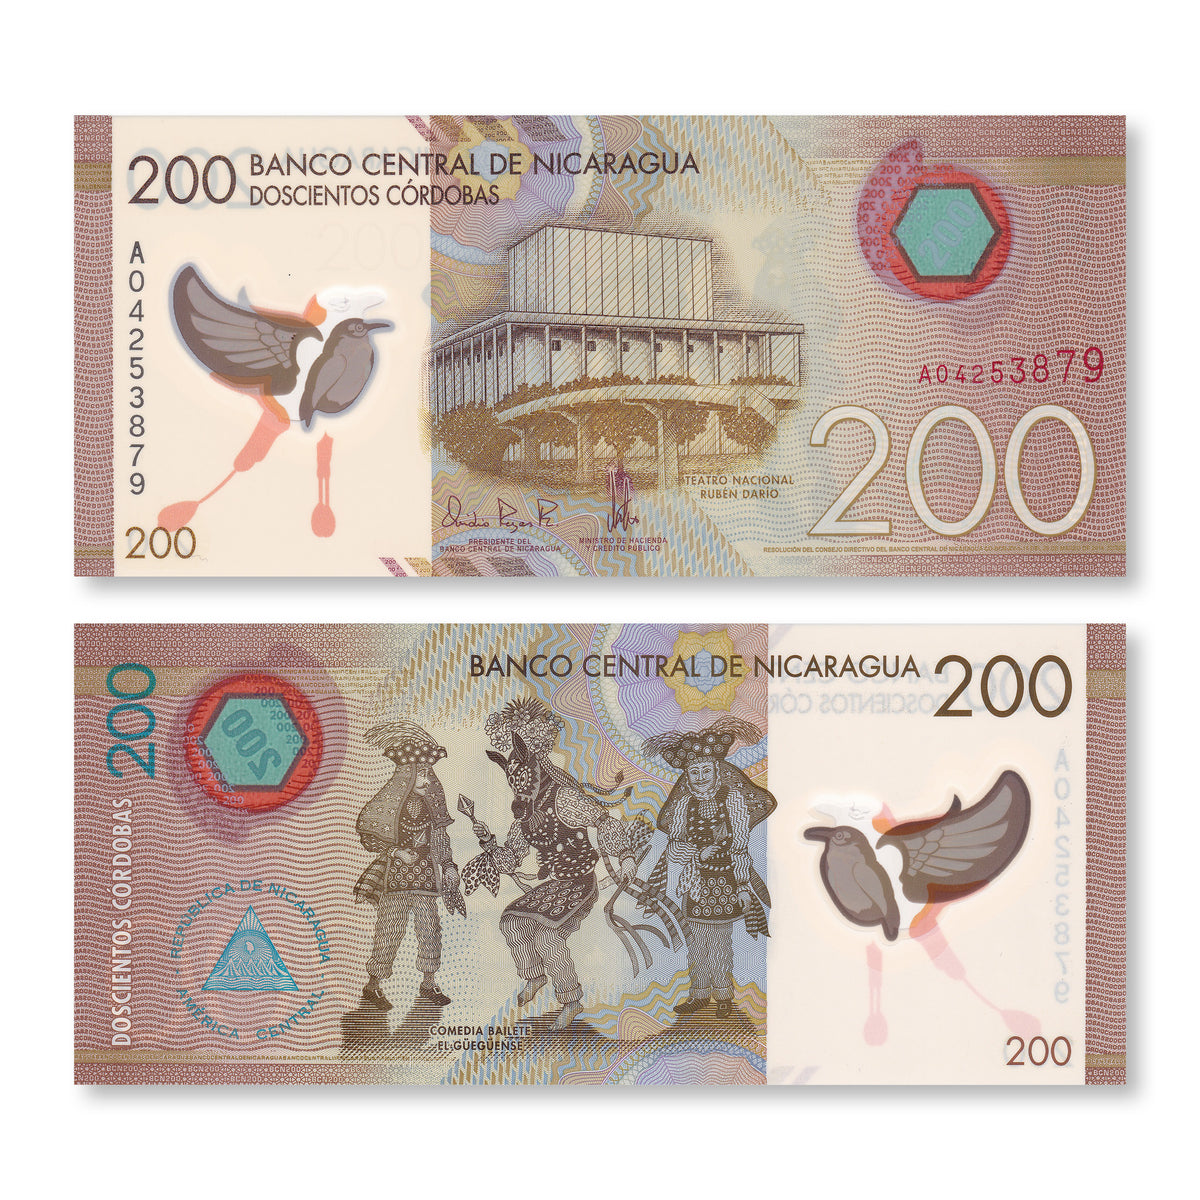 Nicaragua 200 Córdobas, 2014, B510a, P213a, UNC - Robert's World Money - World Banknotes